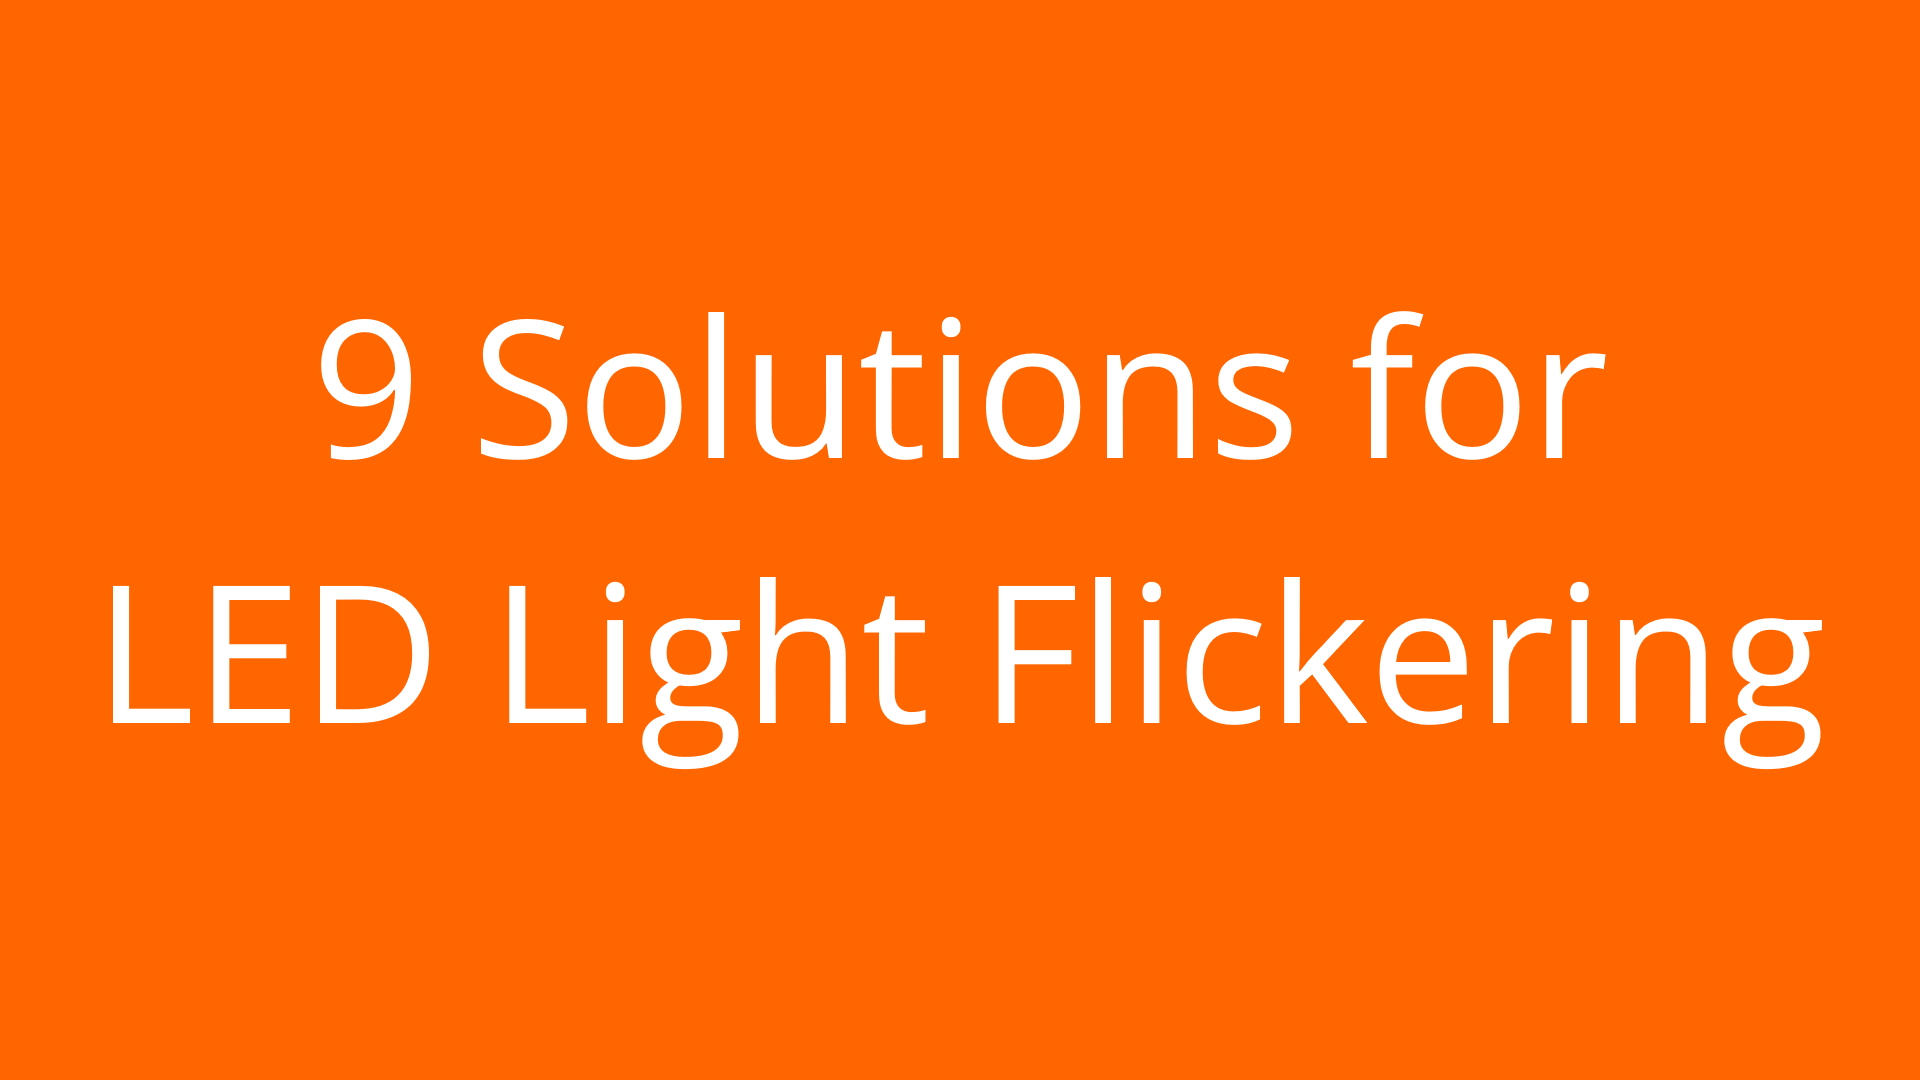 9 Solutions for LED Light Flickering